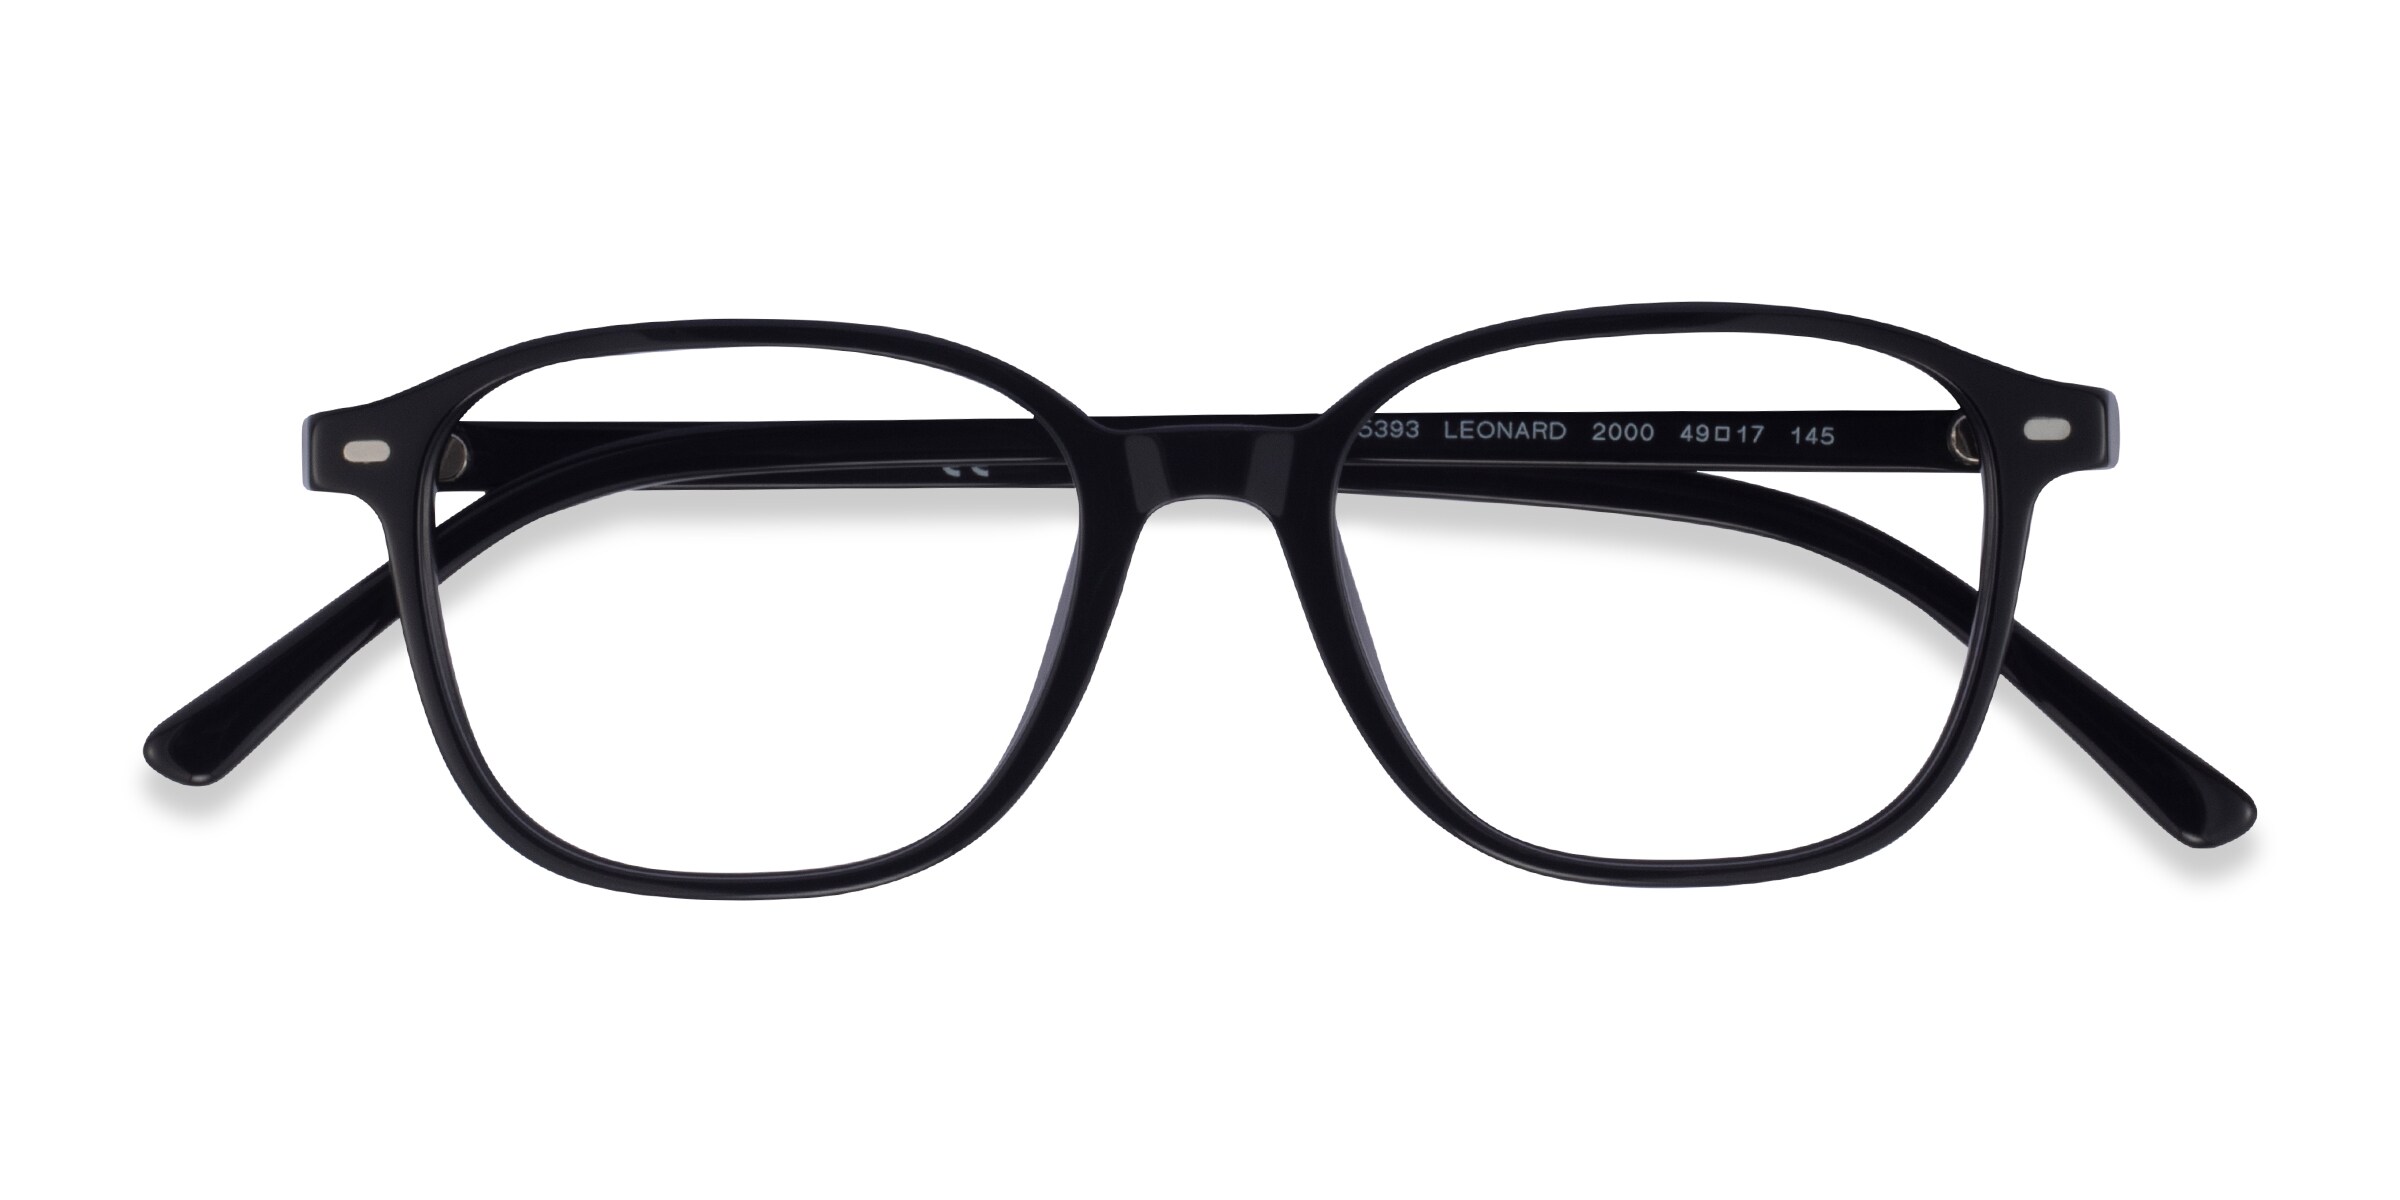 Ray-Ban RB5393 Leonard - Square Black Frame Eyeglasses | Eyebuydirect